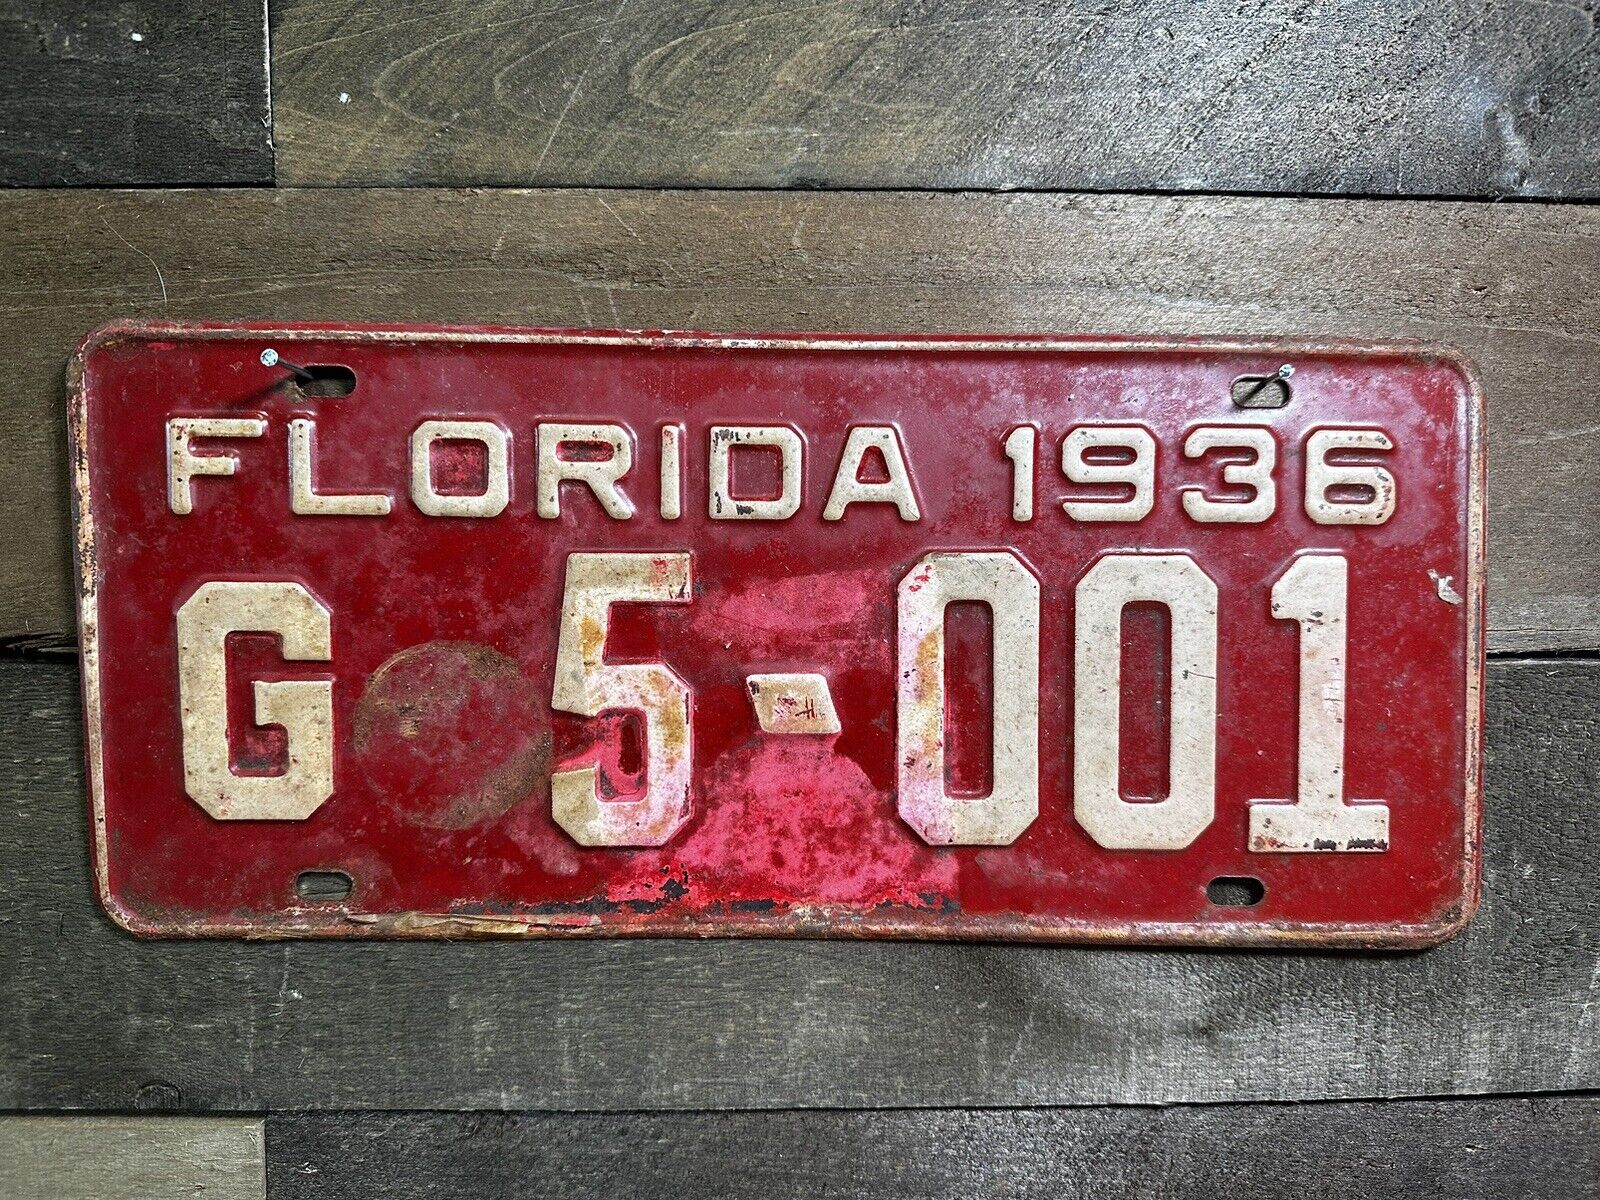 VINTAGE 1936 FLORIDA TAG TRUCK LICENSE PLATE G #5-001